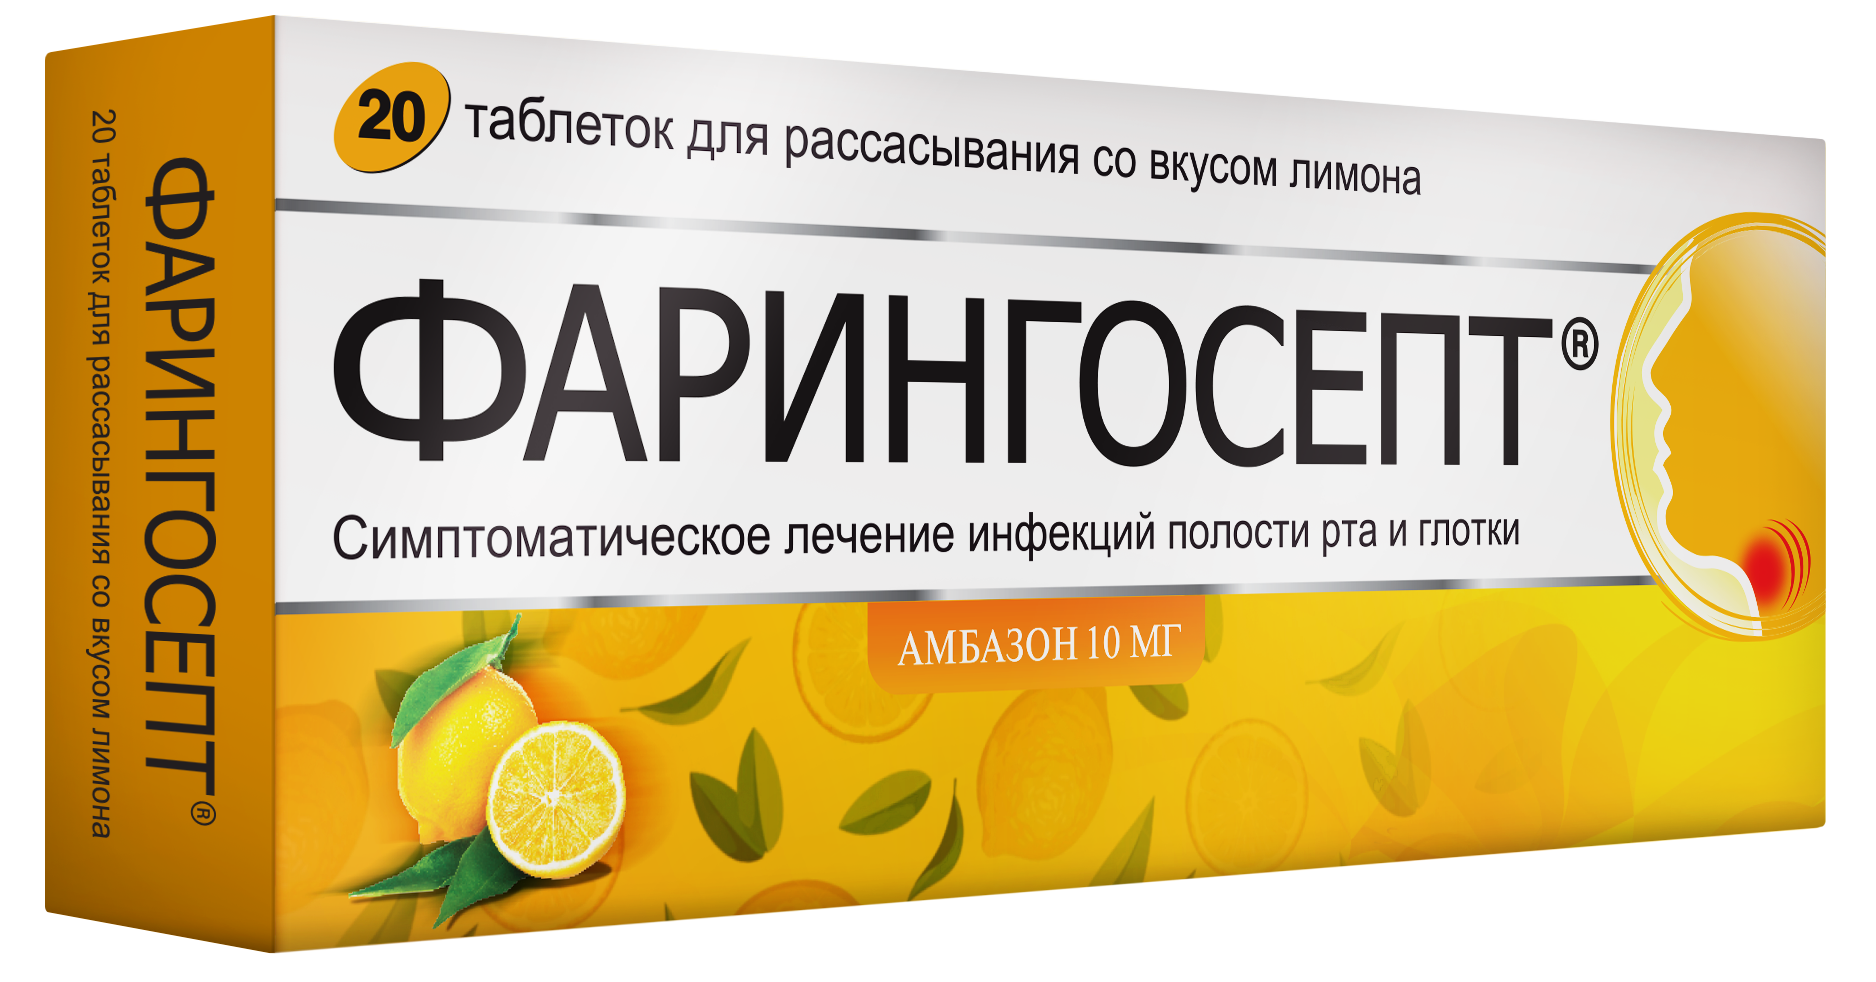 Фарингосепт, таблетки для рассасывания (лимон) 10 мг, 20 шт. фарингосепт лимон таблетки для рассасывания 10мг 20шт